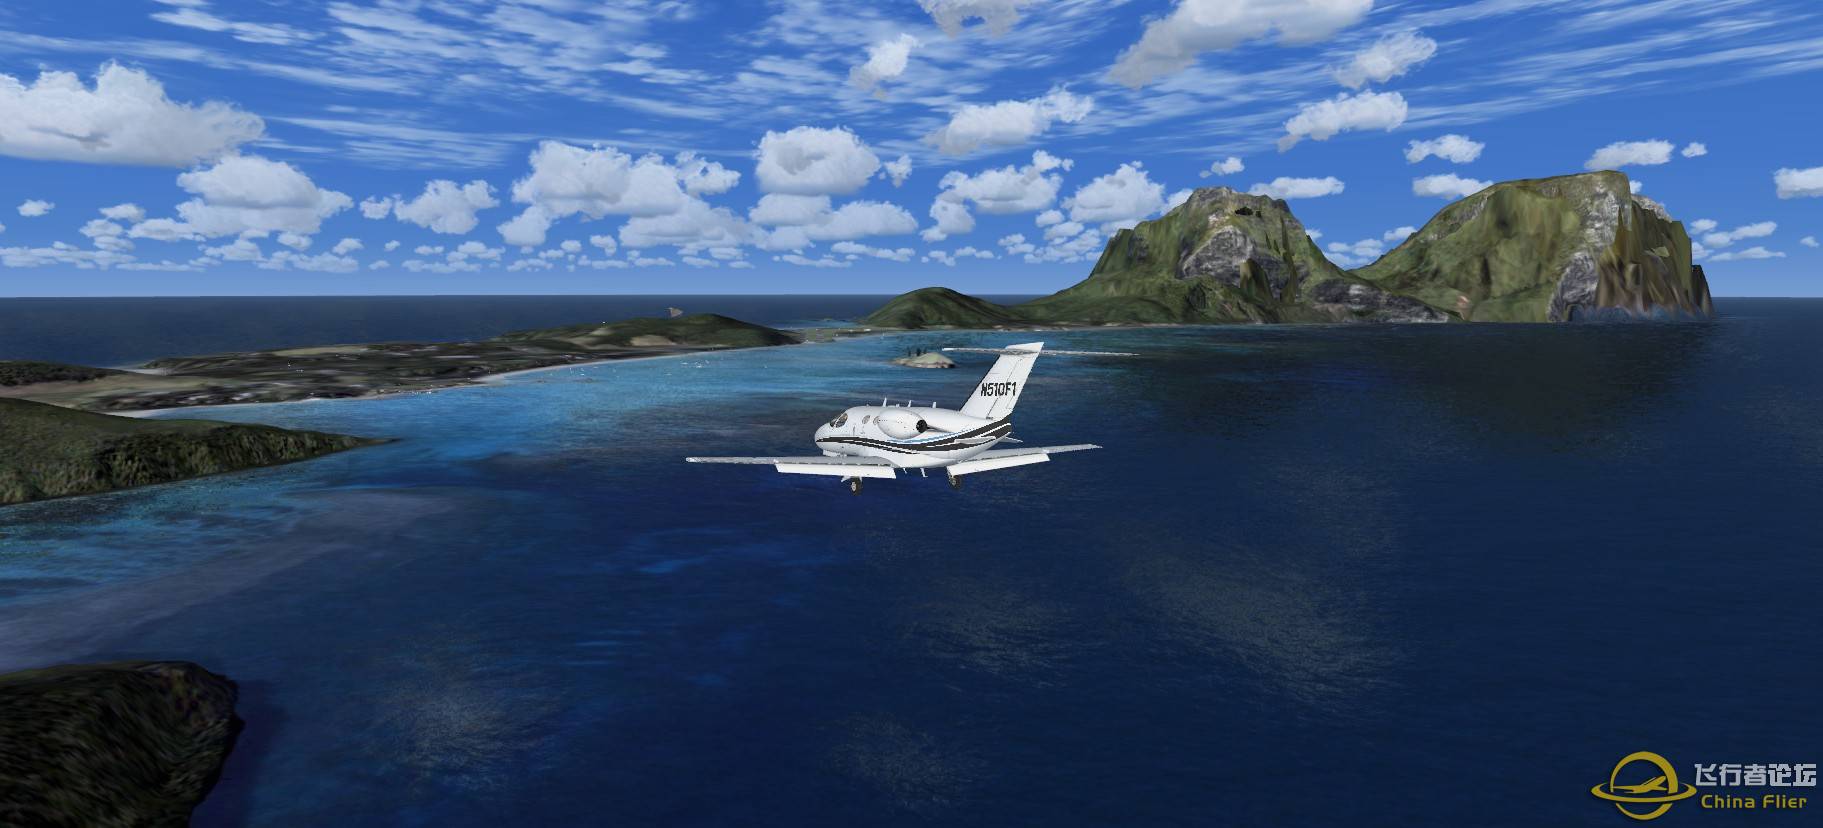 Aerosoft Lord Howe Island 紧邻澳洲的小岛-8335 